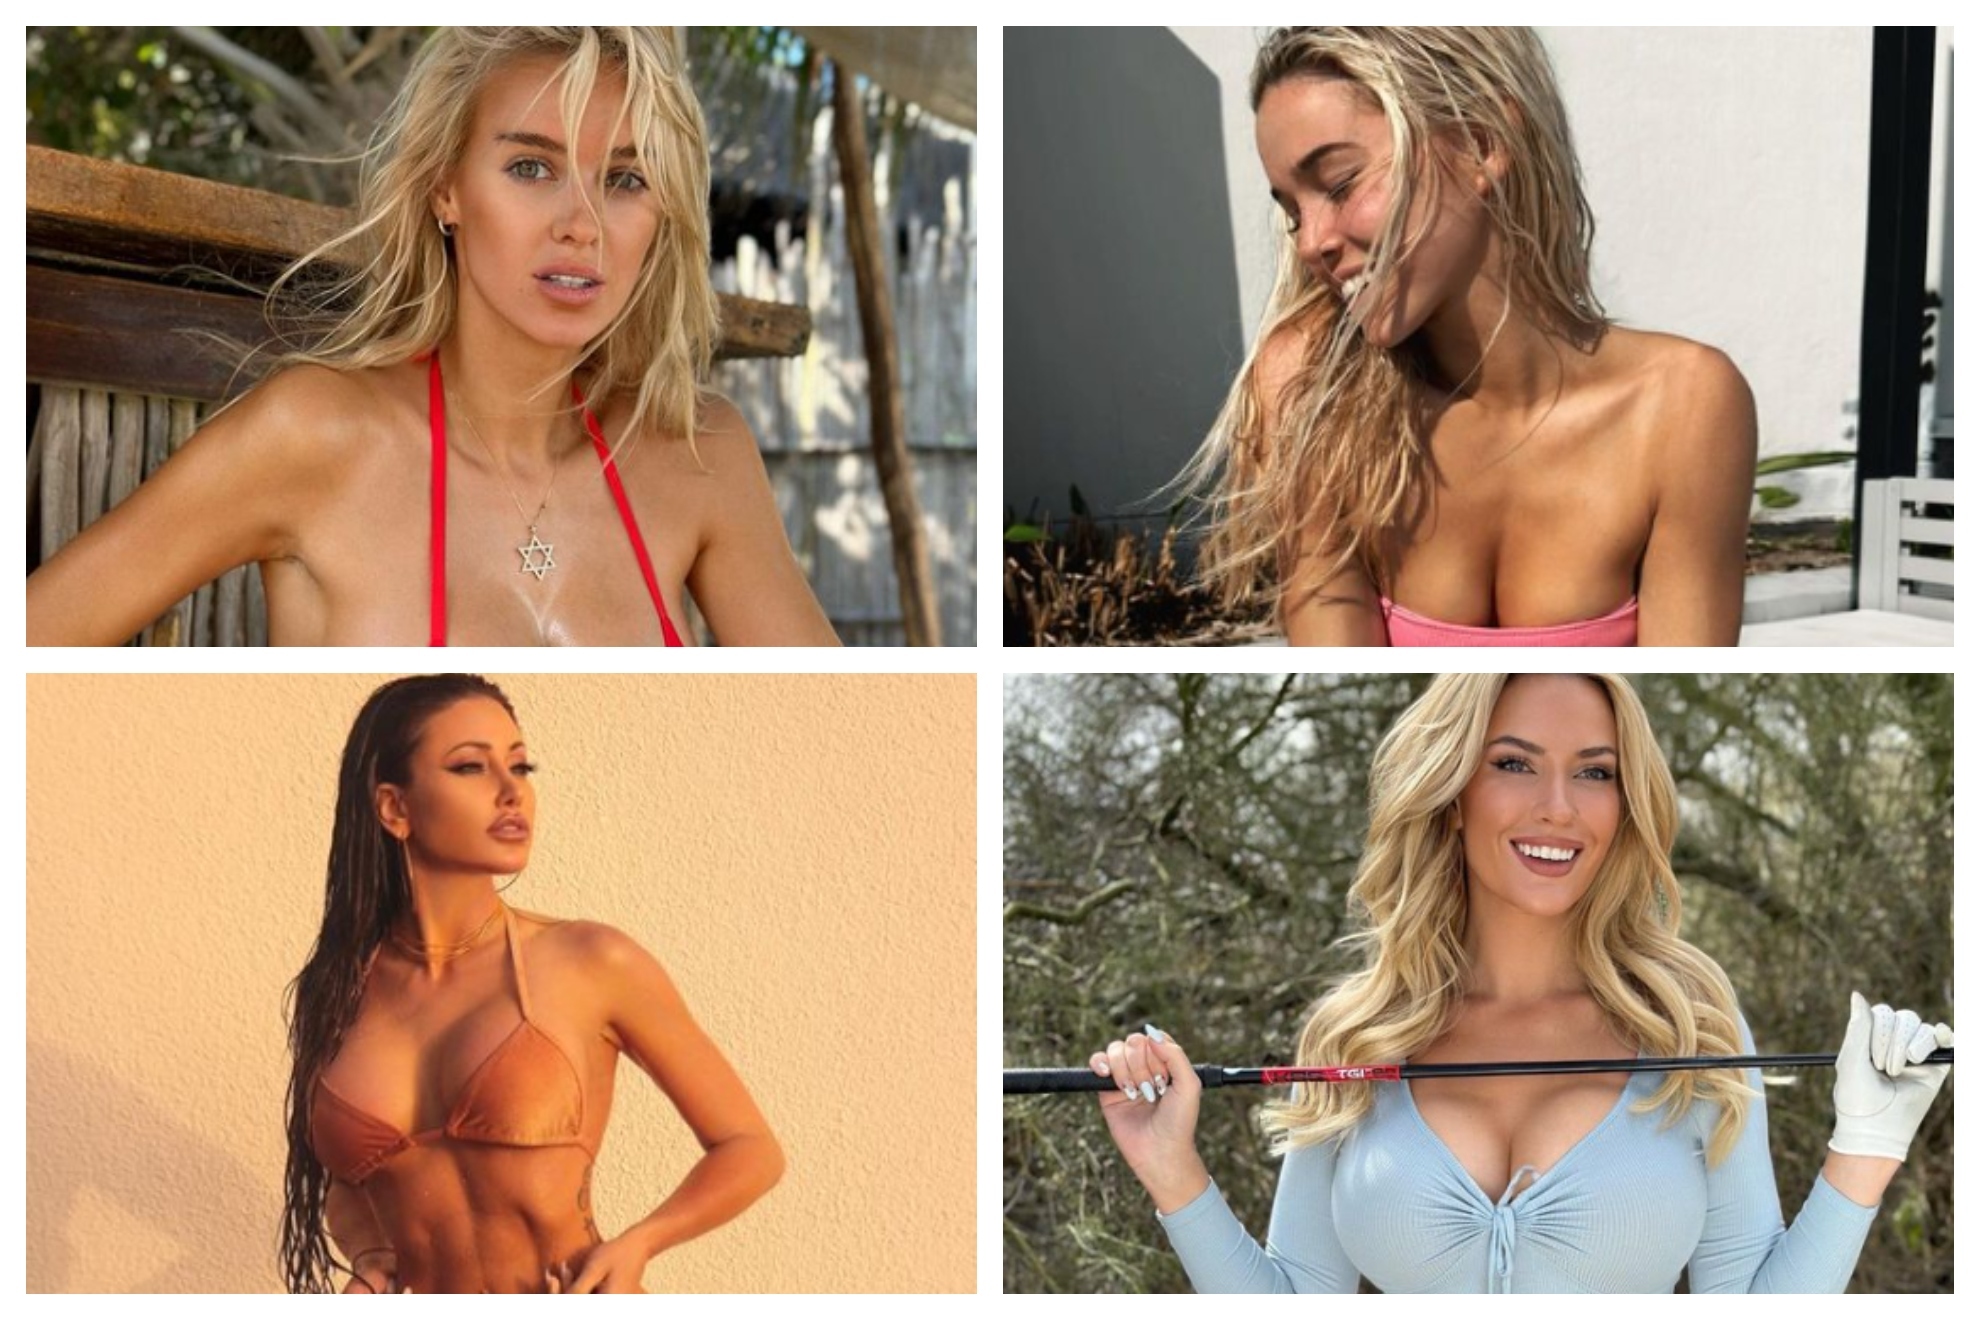 Holly Sonders, Veronika Rajek, Paige Spiranac or Olivia Dunne: Who is Instagram's sexiest influencer?